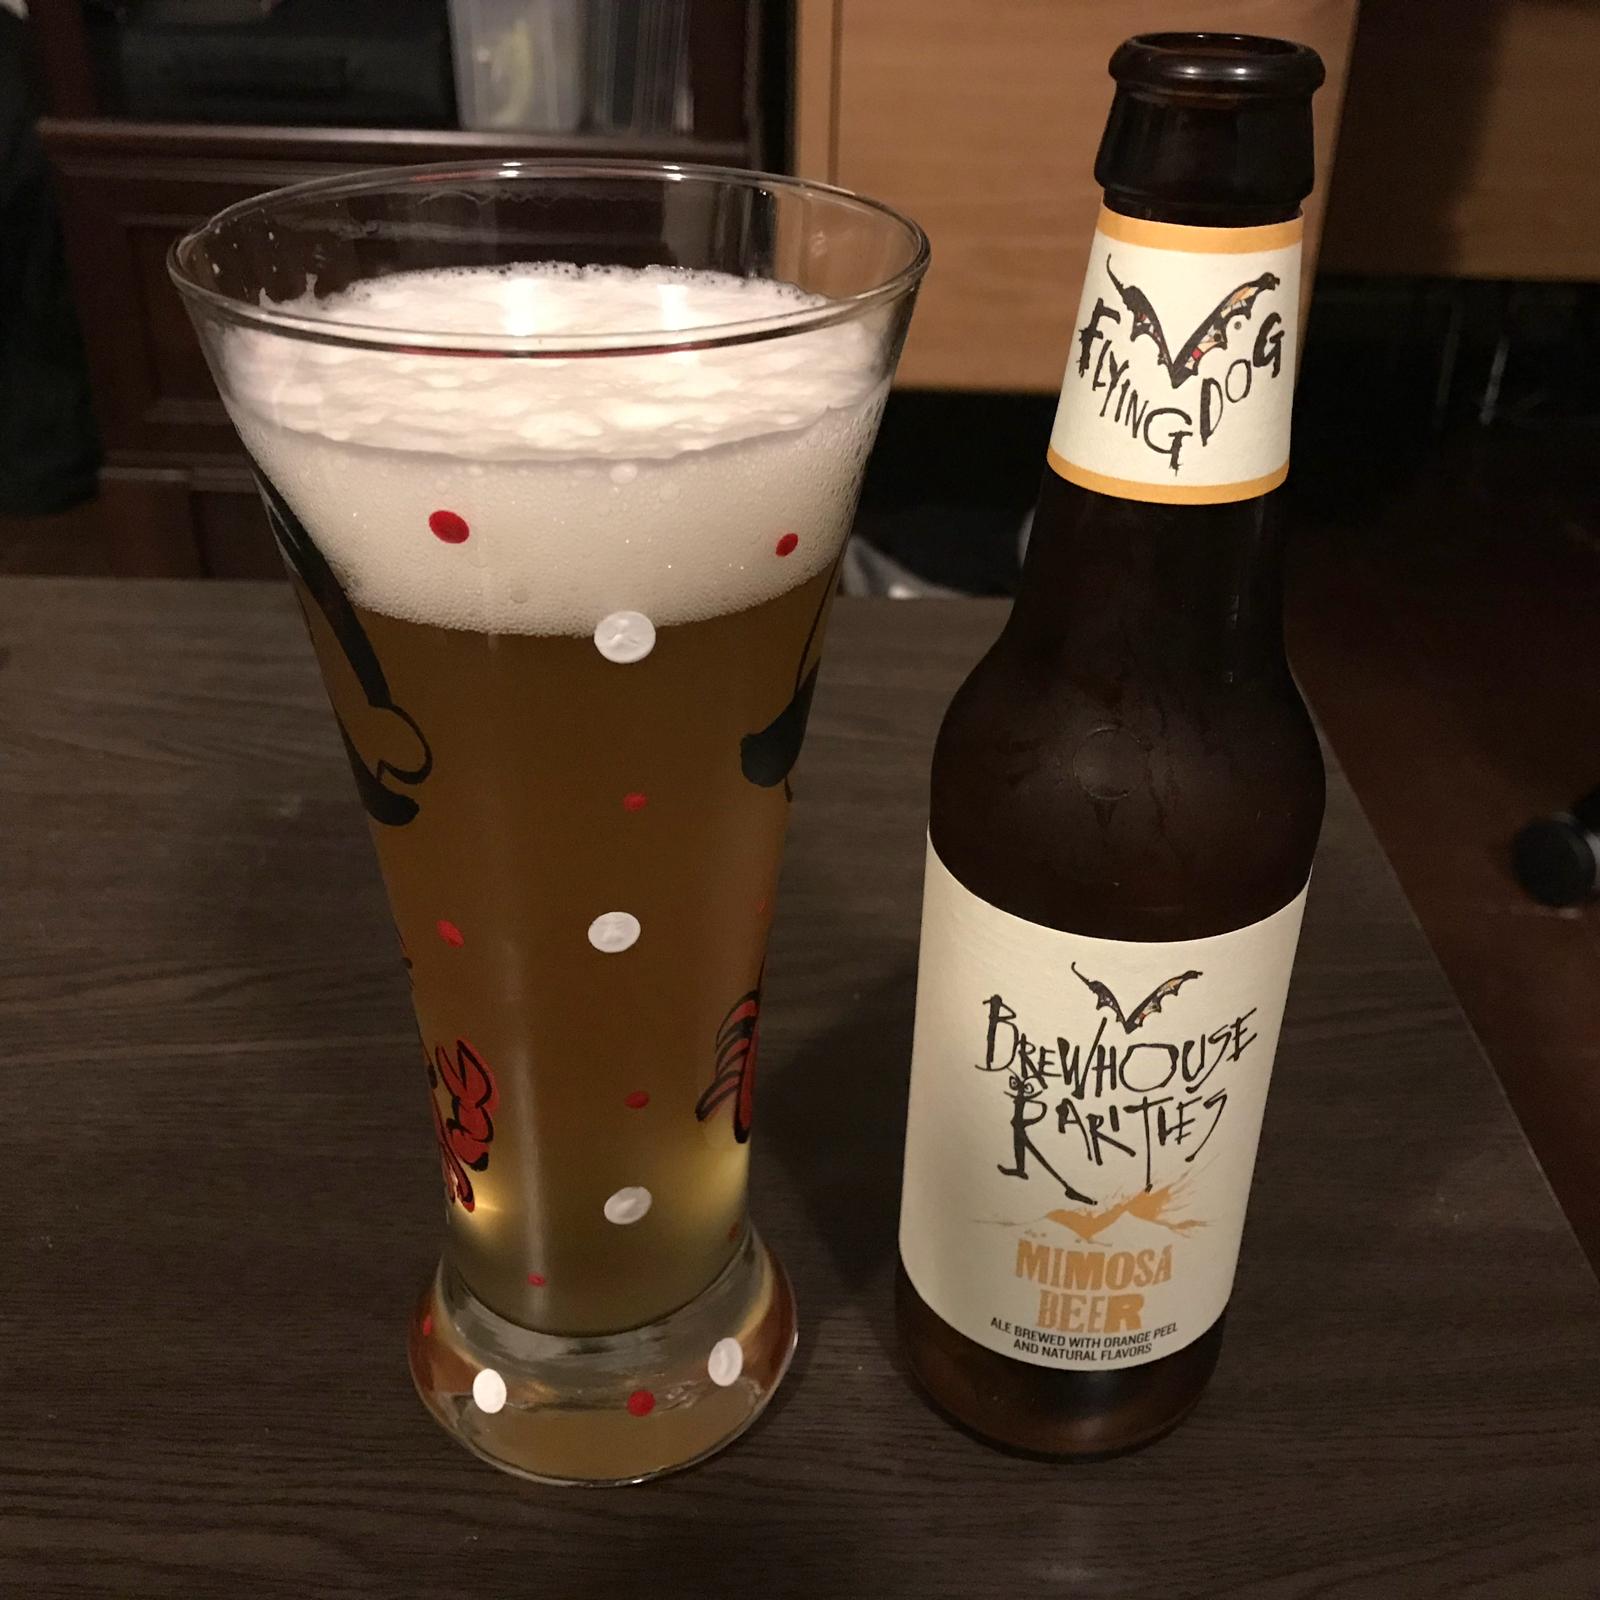 Brewhouse Rarities - Mimosa Beer